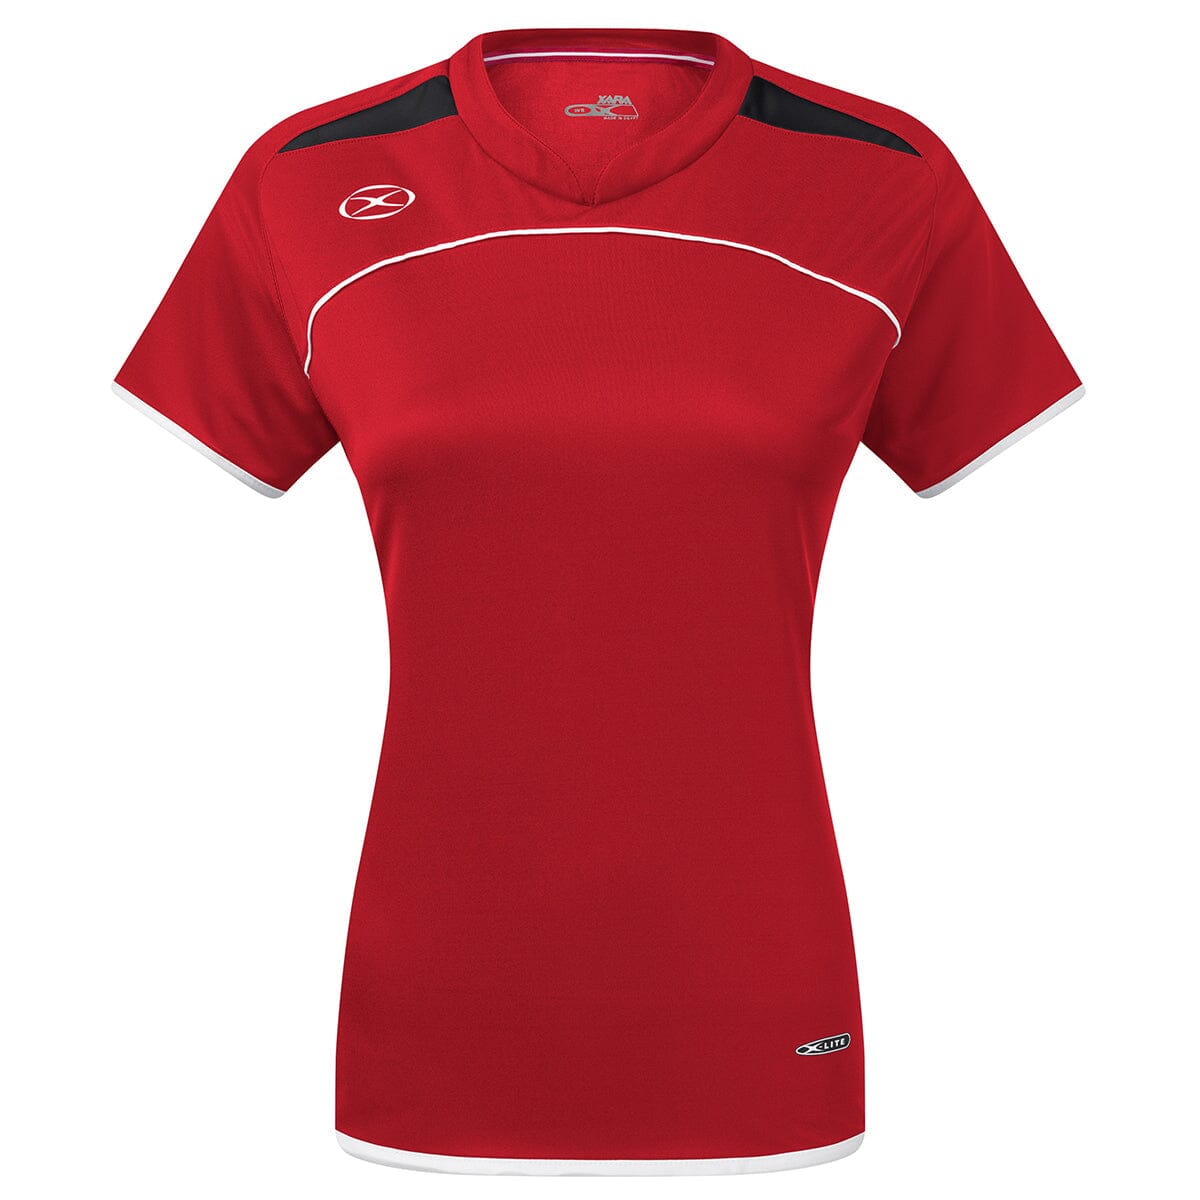 Cardiff Jersey - Female Shirt Xara Soccer Red/Black/White Womens Large 